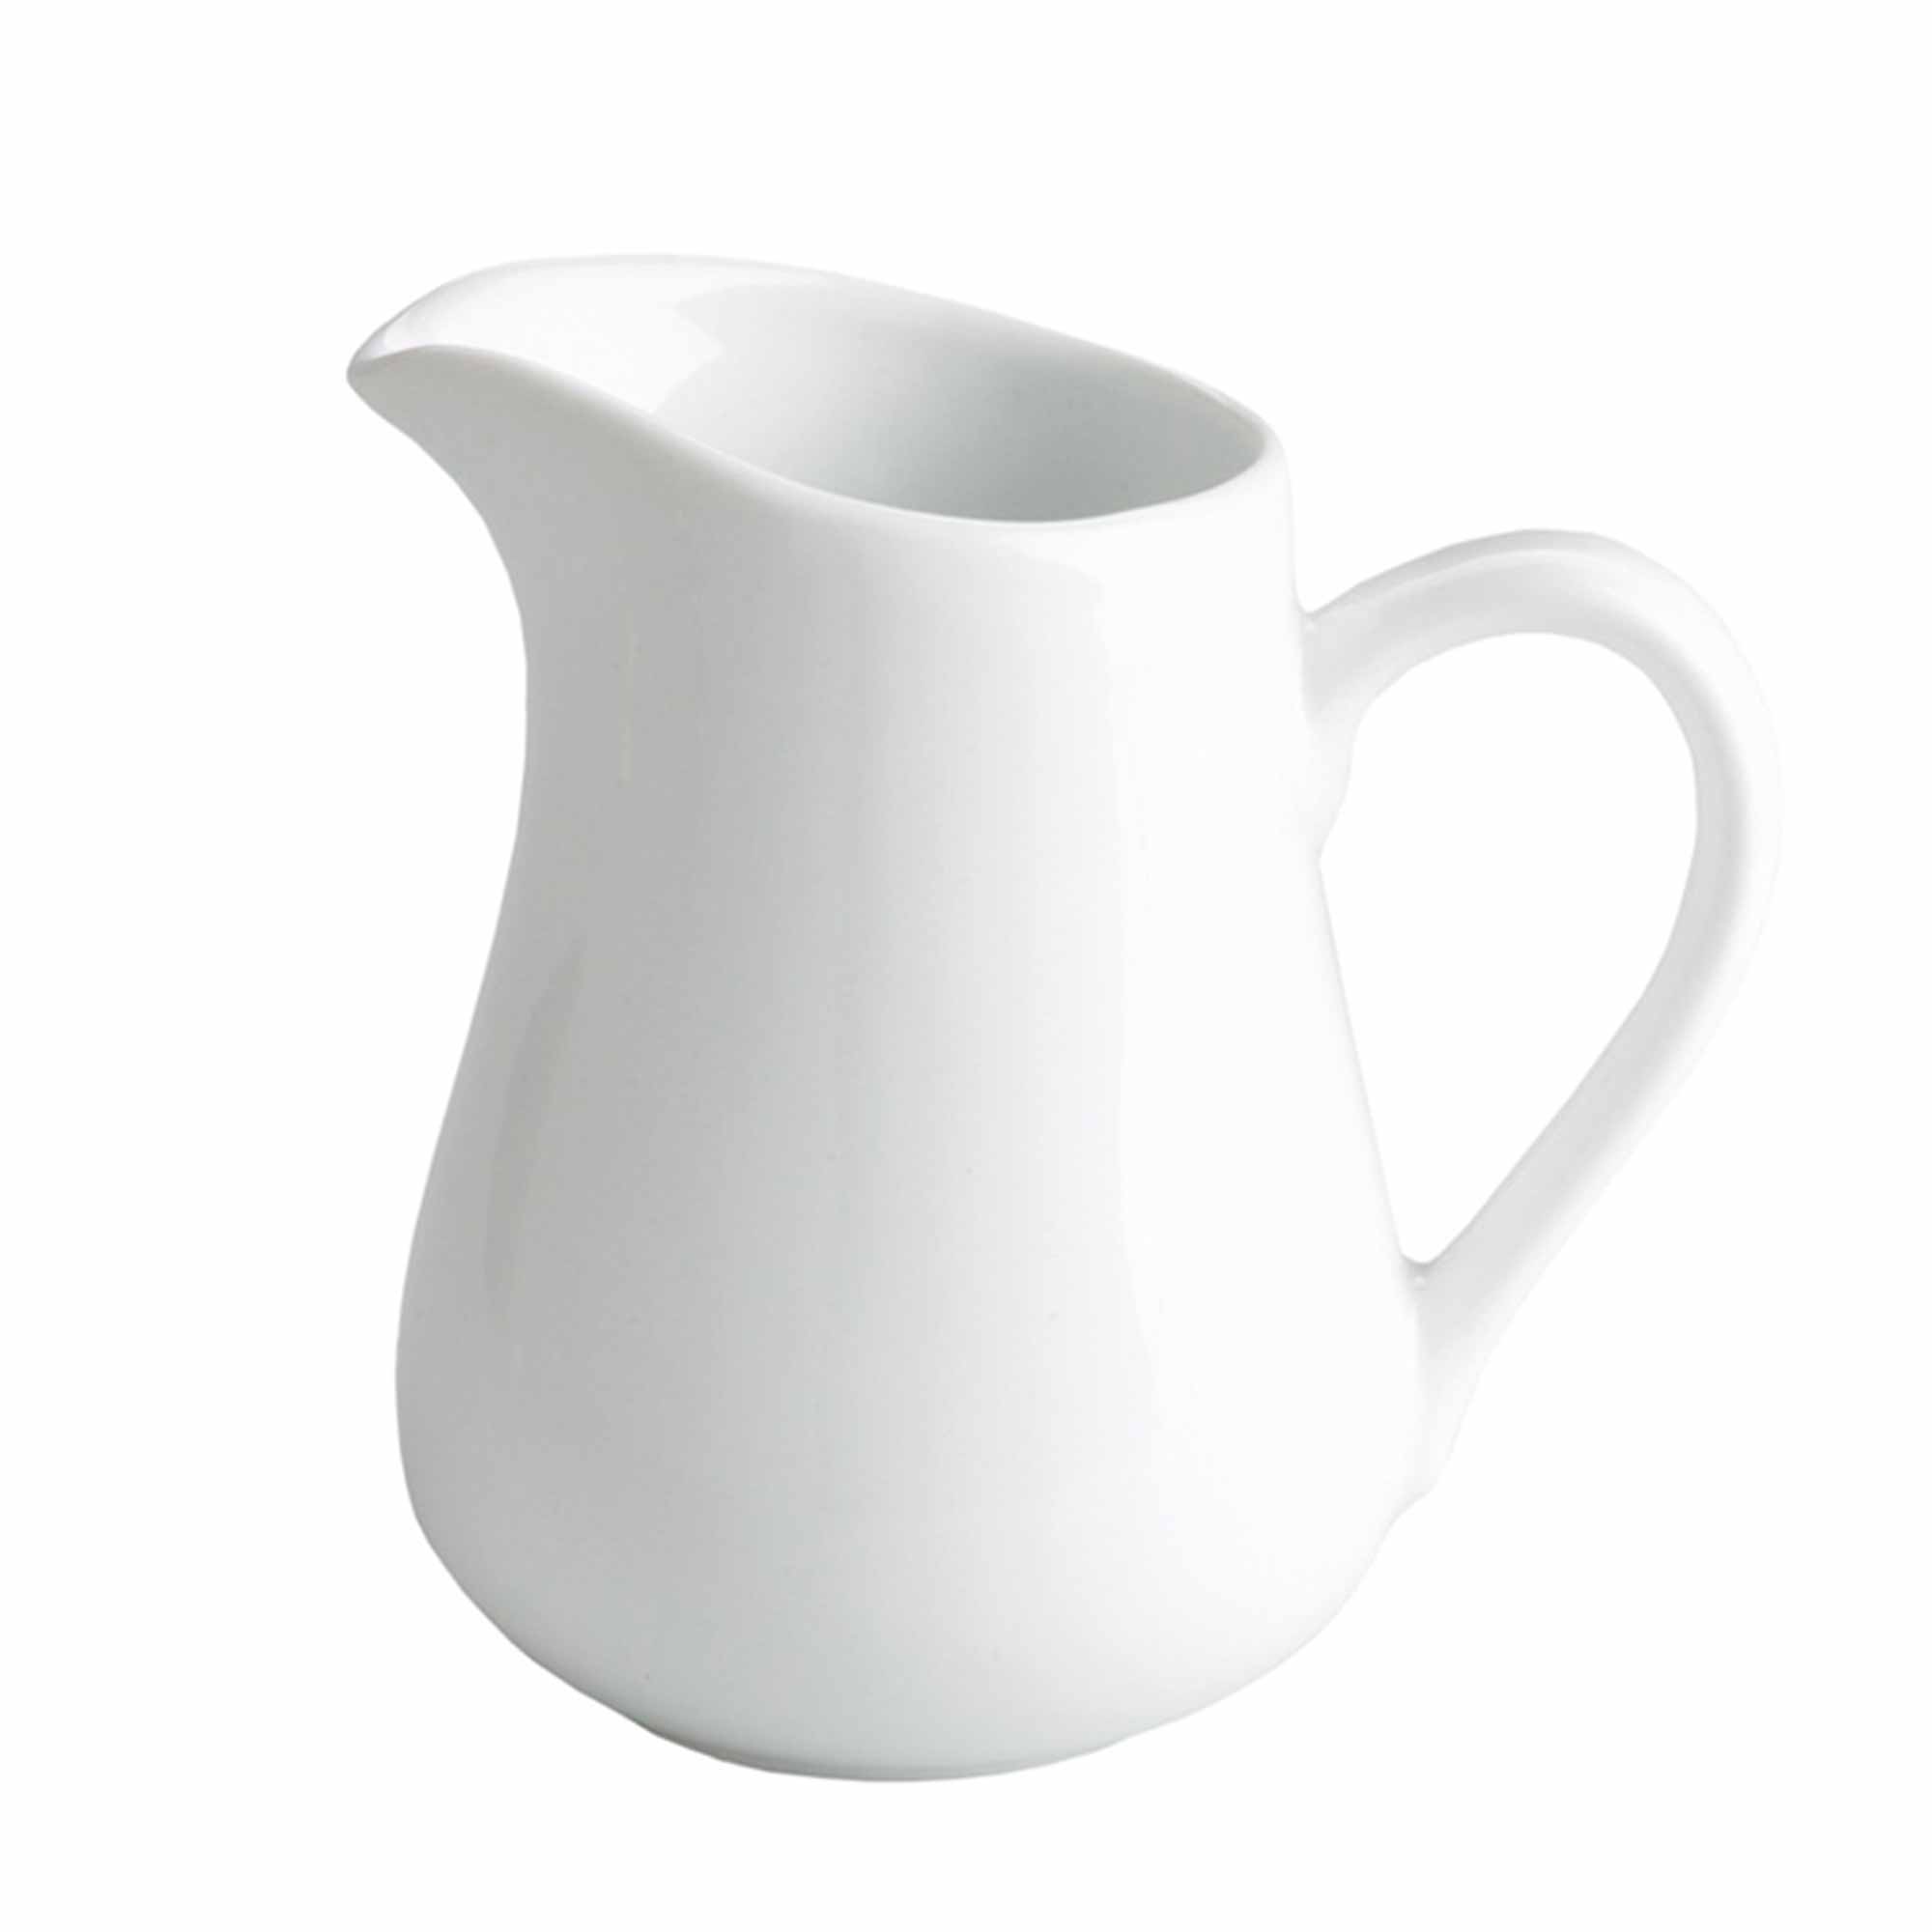 Moonlight Porcelain Milk Pot White 200ml at drinkstuff